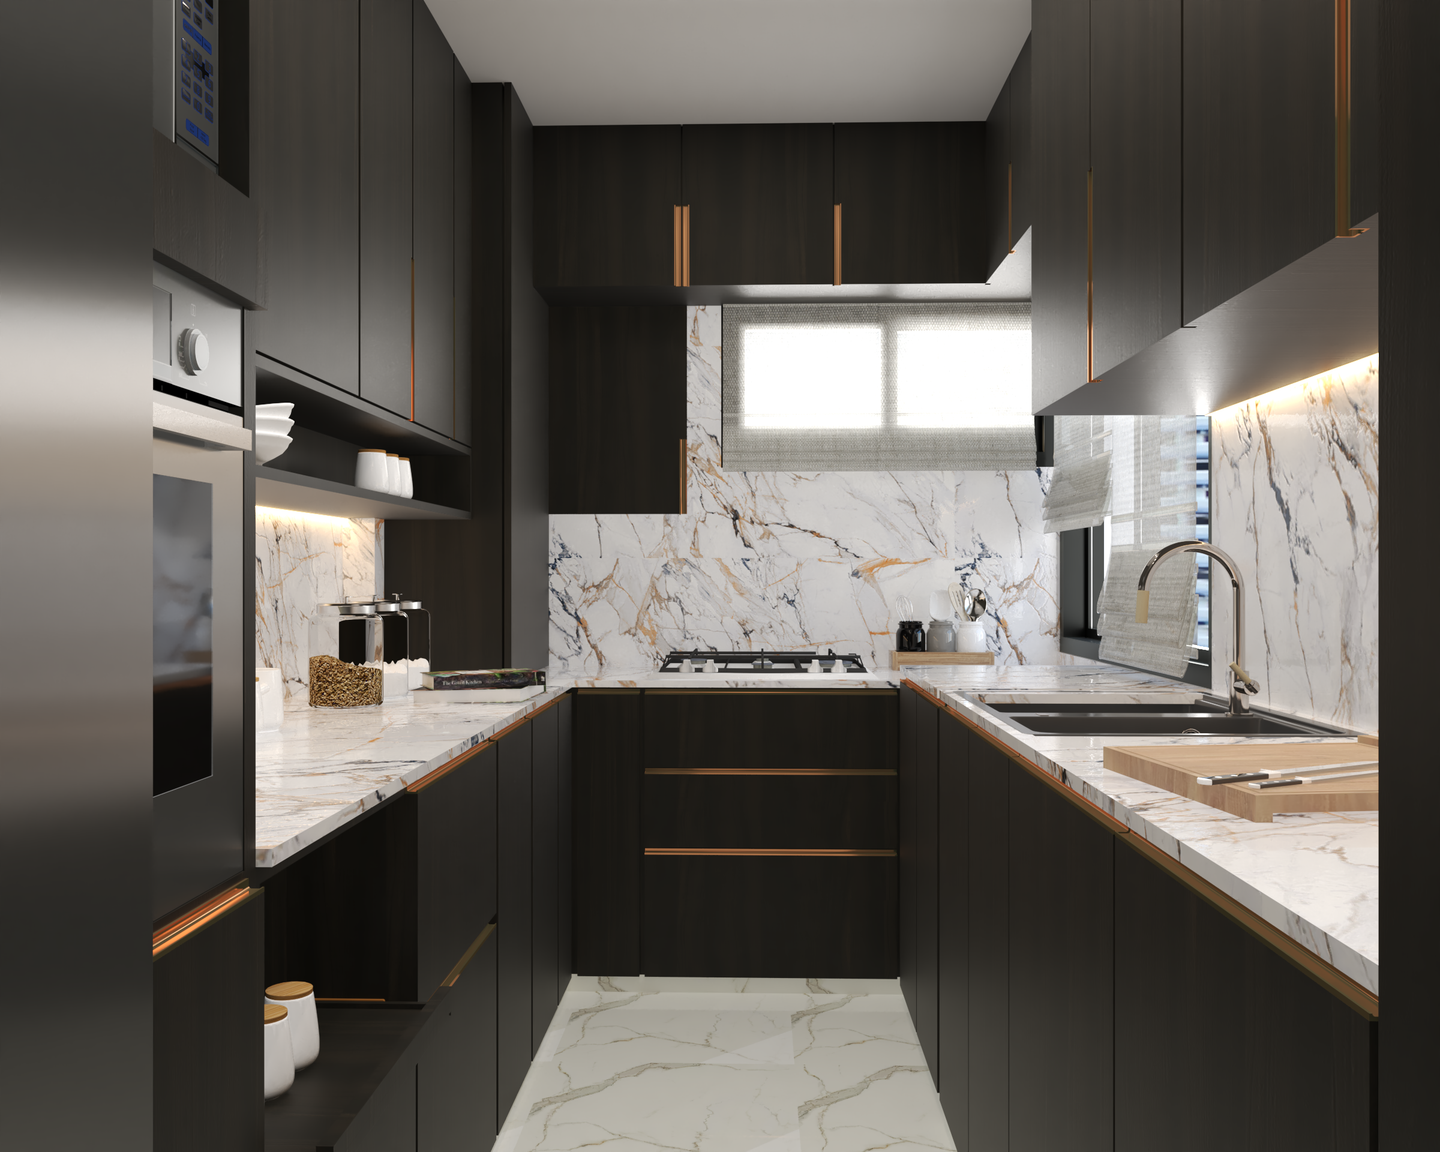 Dado Tiles Modern Kitchen Design with Dark Wood Cabinets and Golden Handles - Livspace